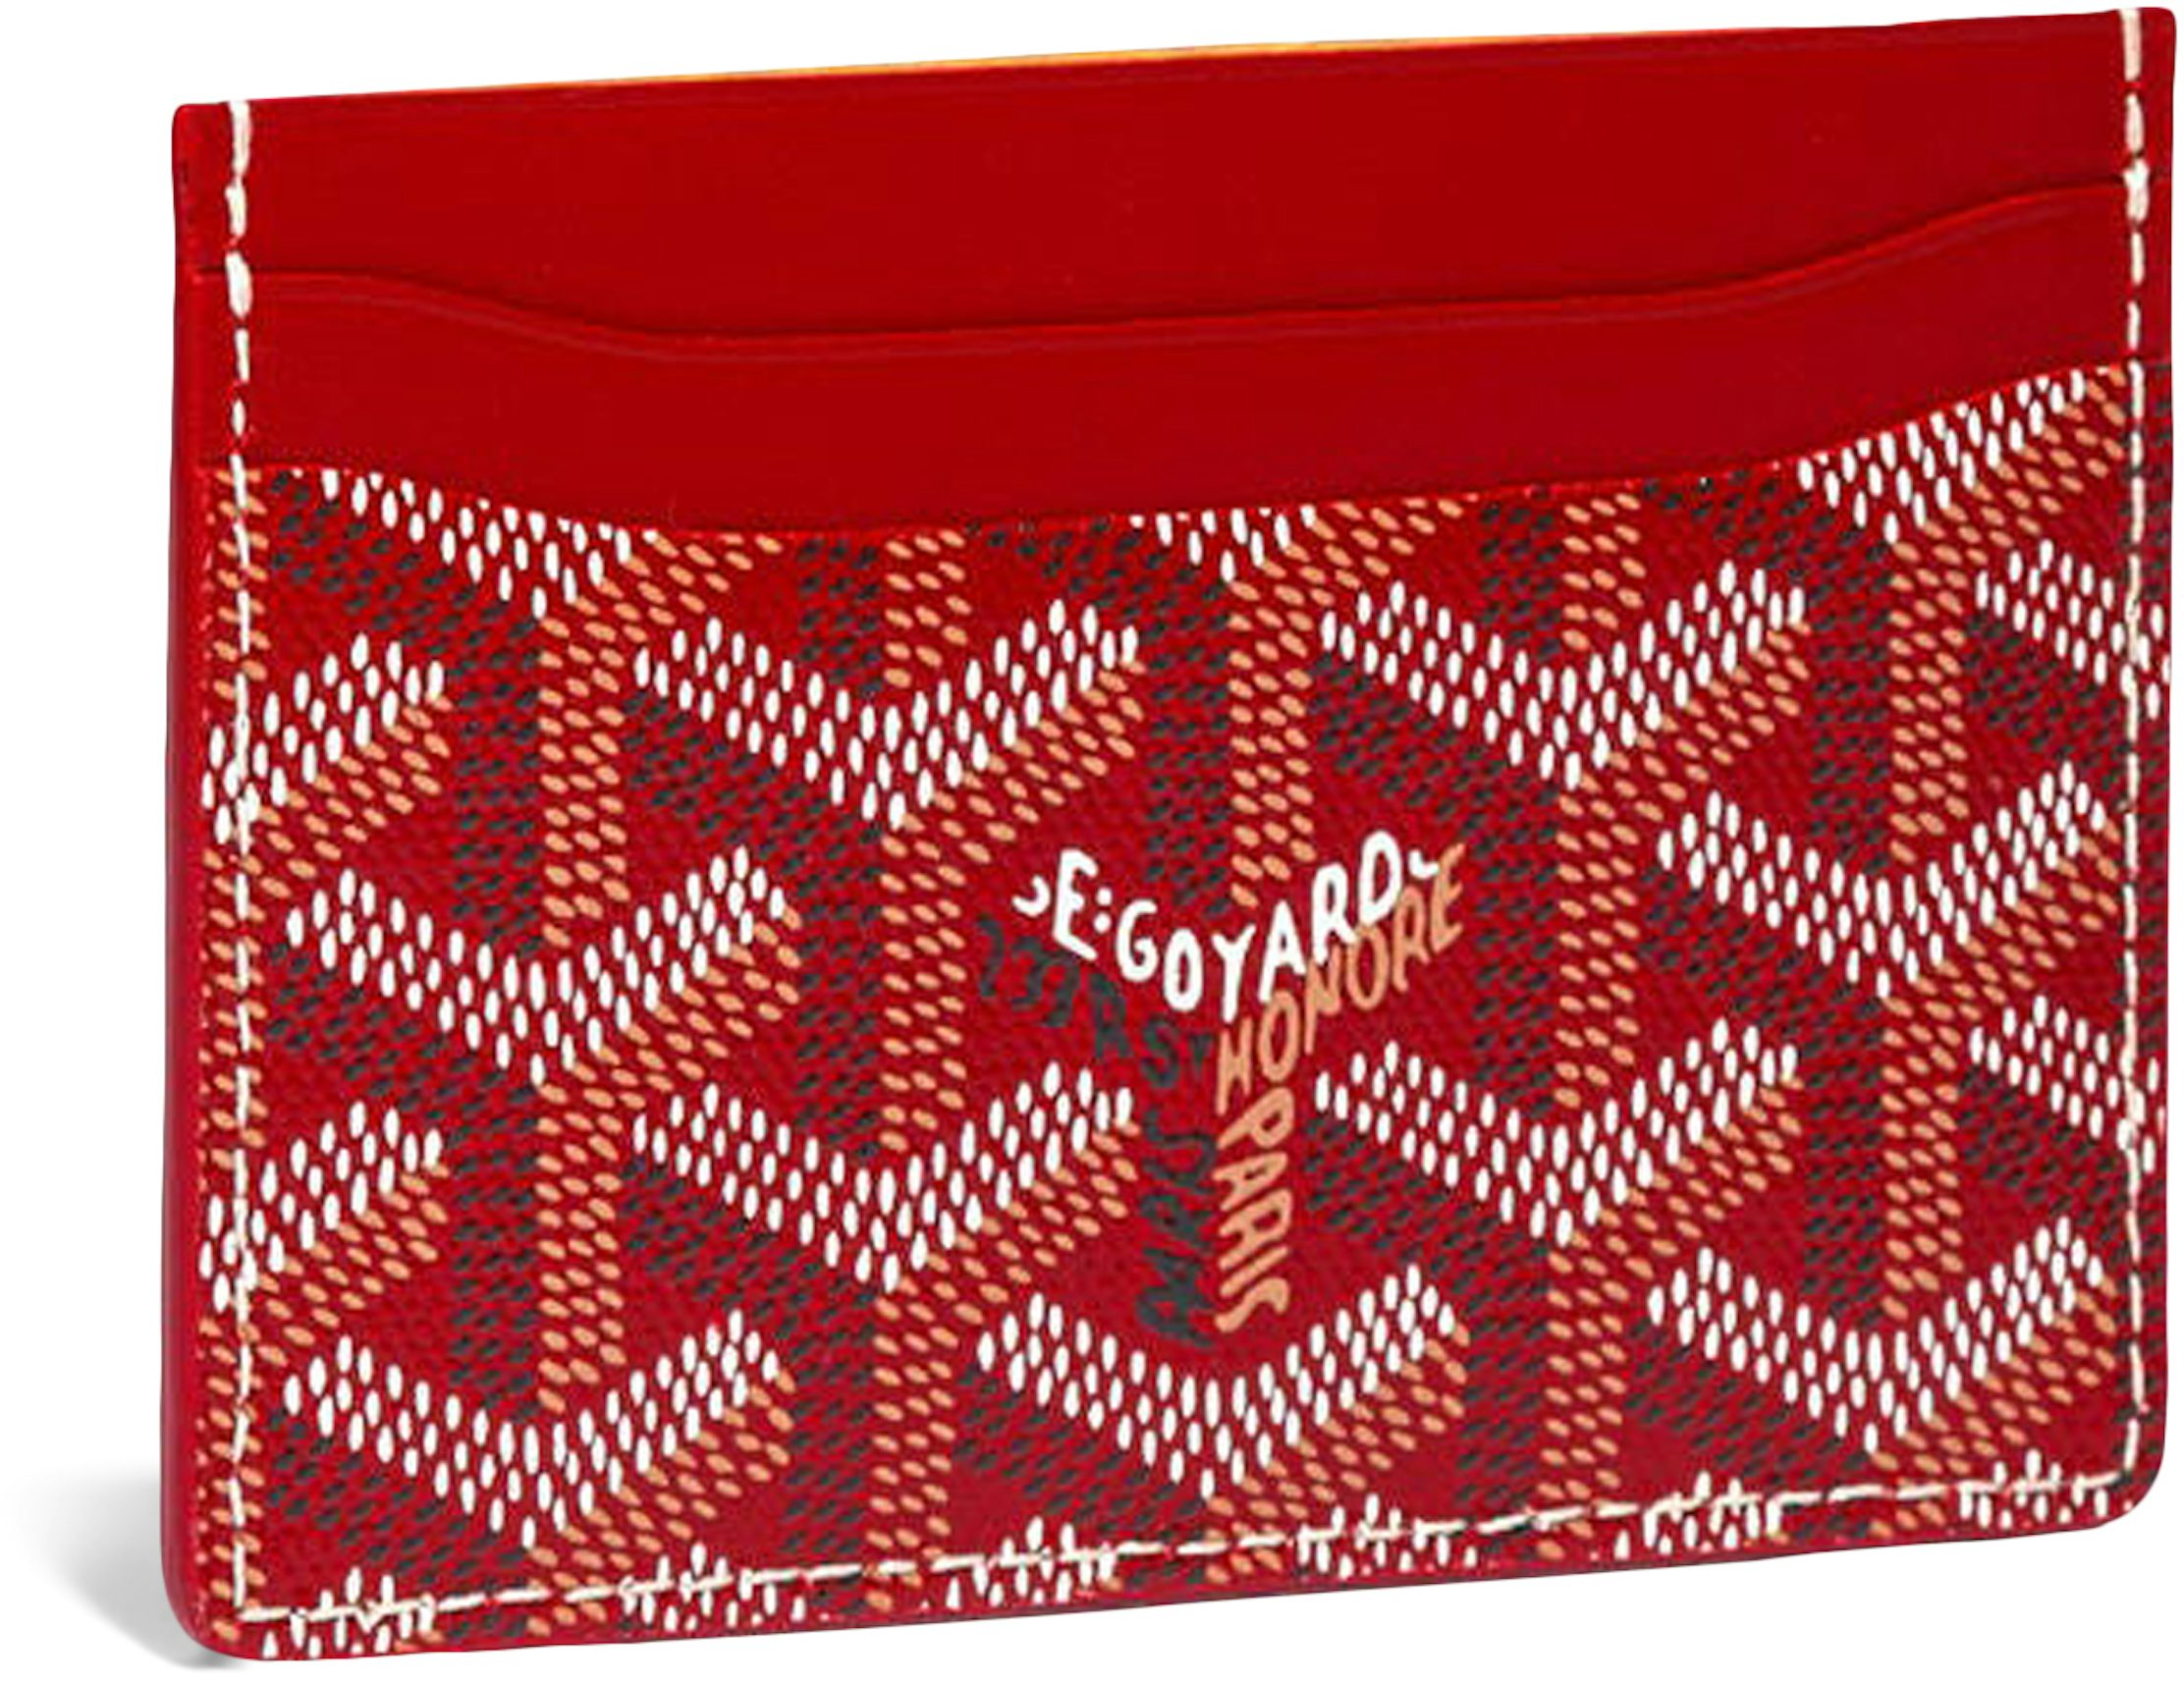 Goyard Red Malesherbes Card Wallet, Designer Brand, Authentic Goyard